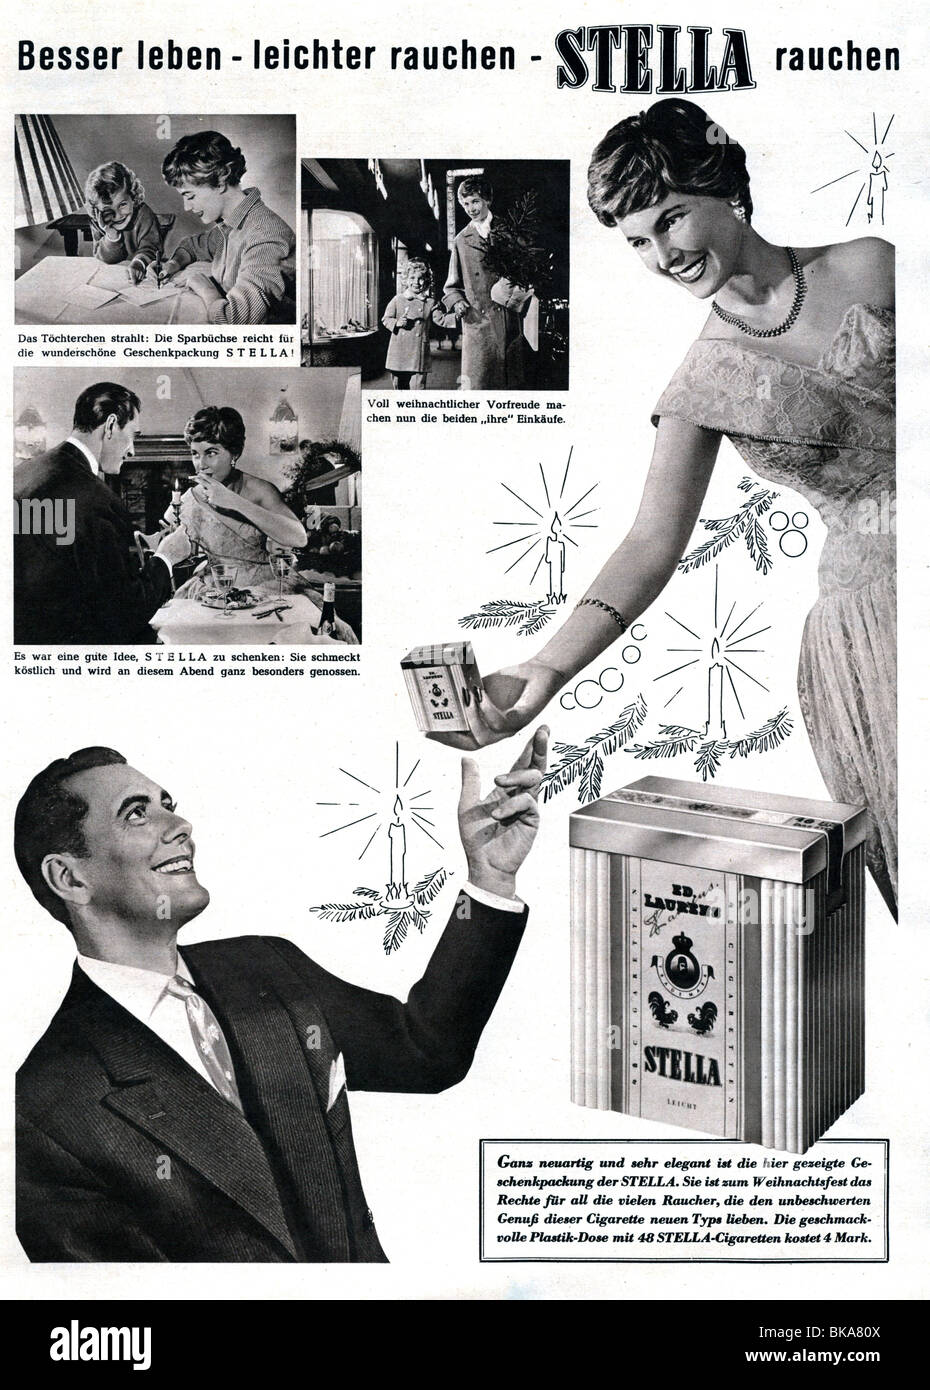 1953 Saran Wrap® ad, Vintage Ads, History